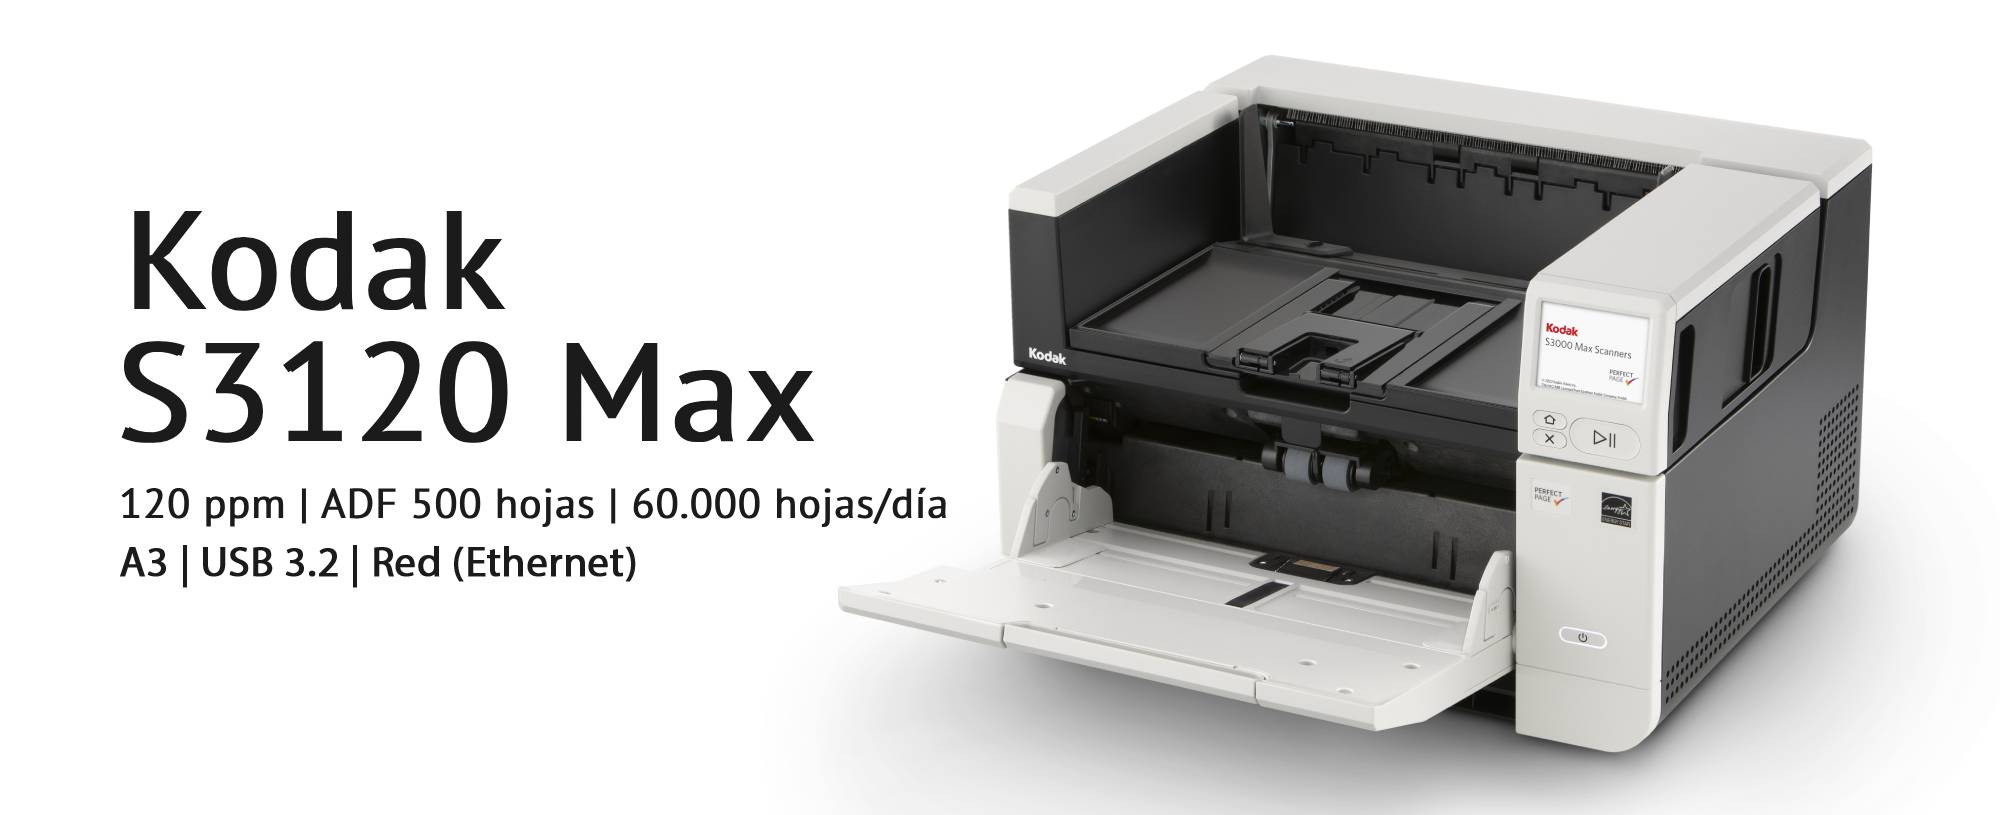 Scanner Kodak s3120 Max